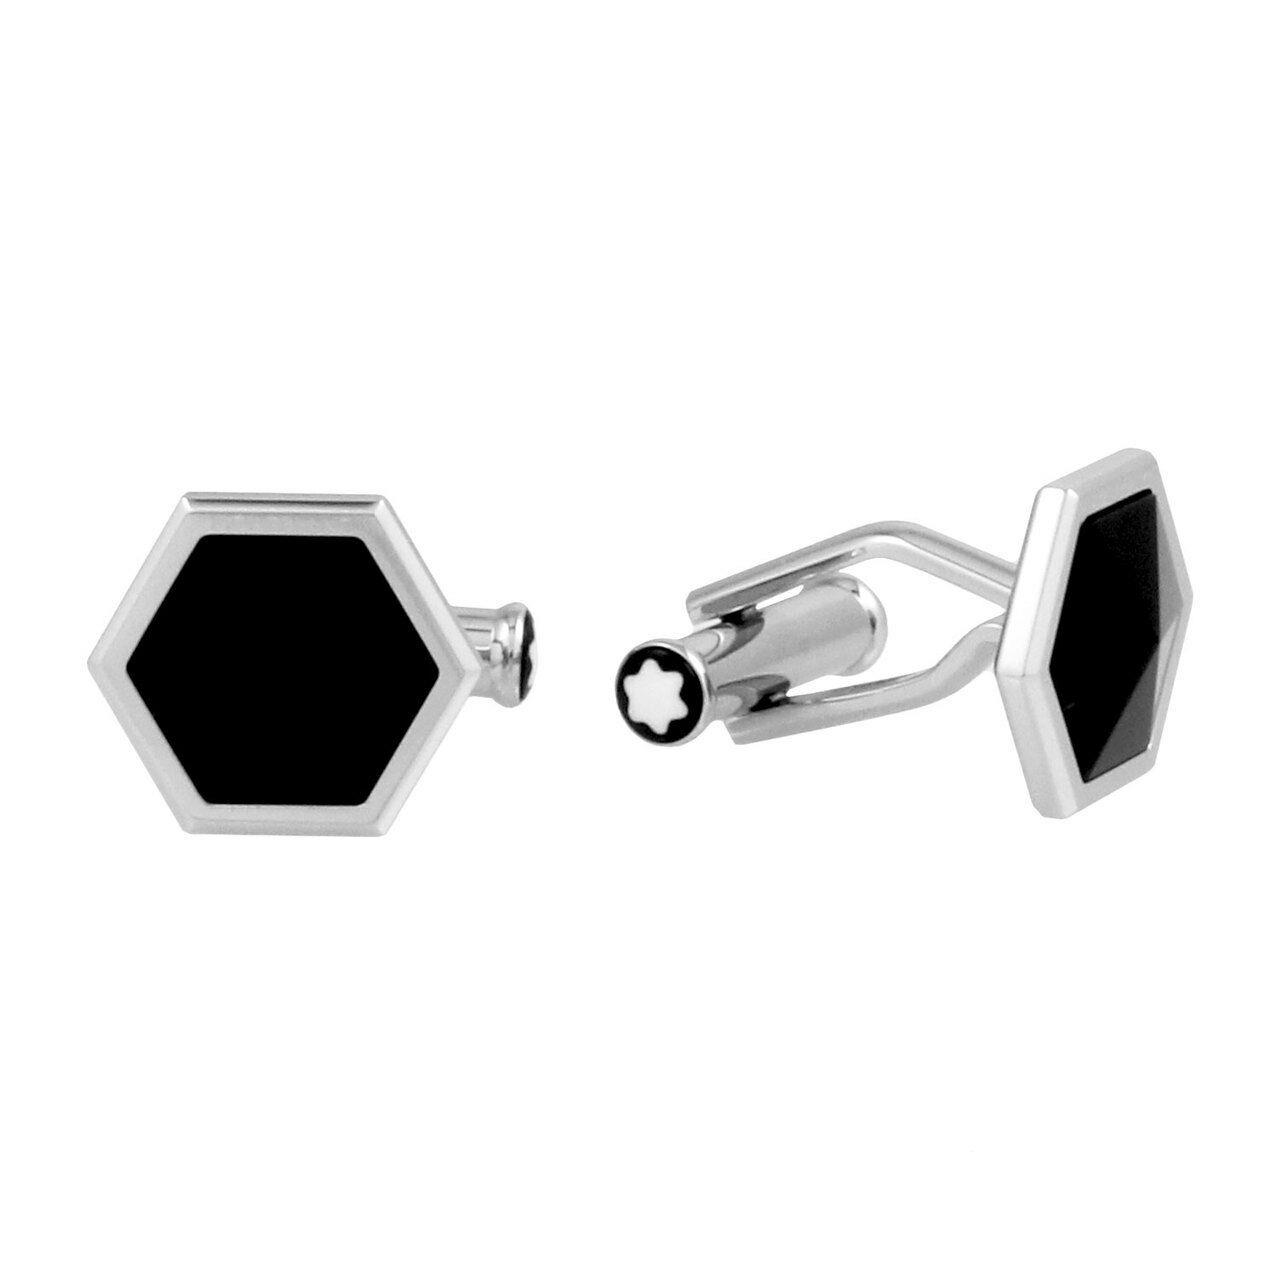 Montblanc S-steel Sartorial Black Onyx Hexagonal Shape Cuff Links 118599